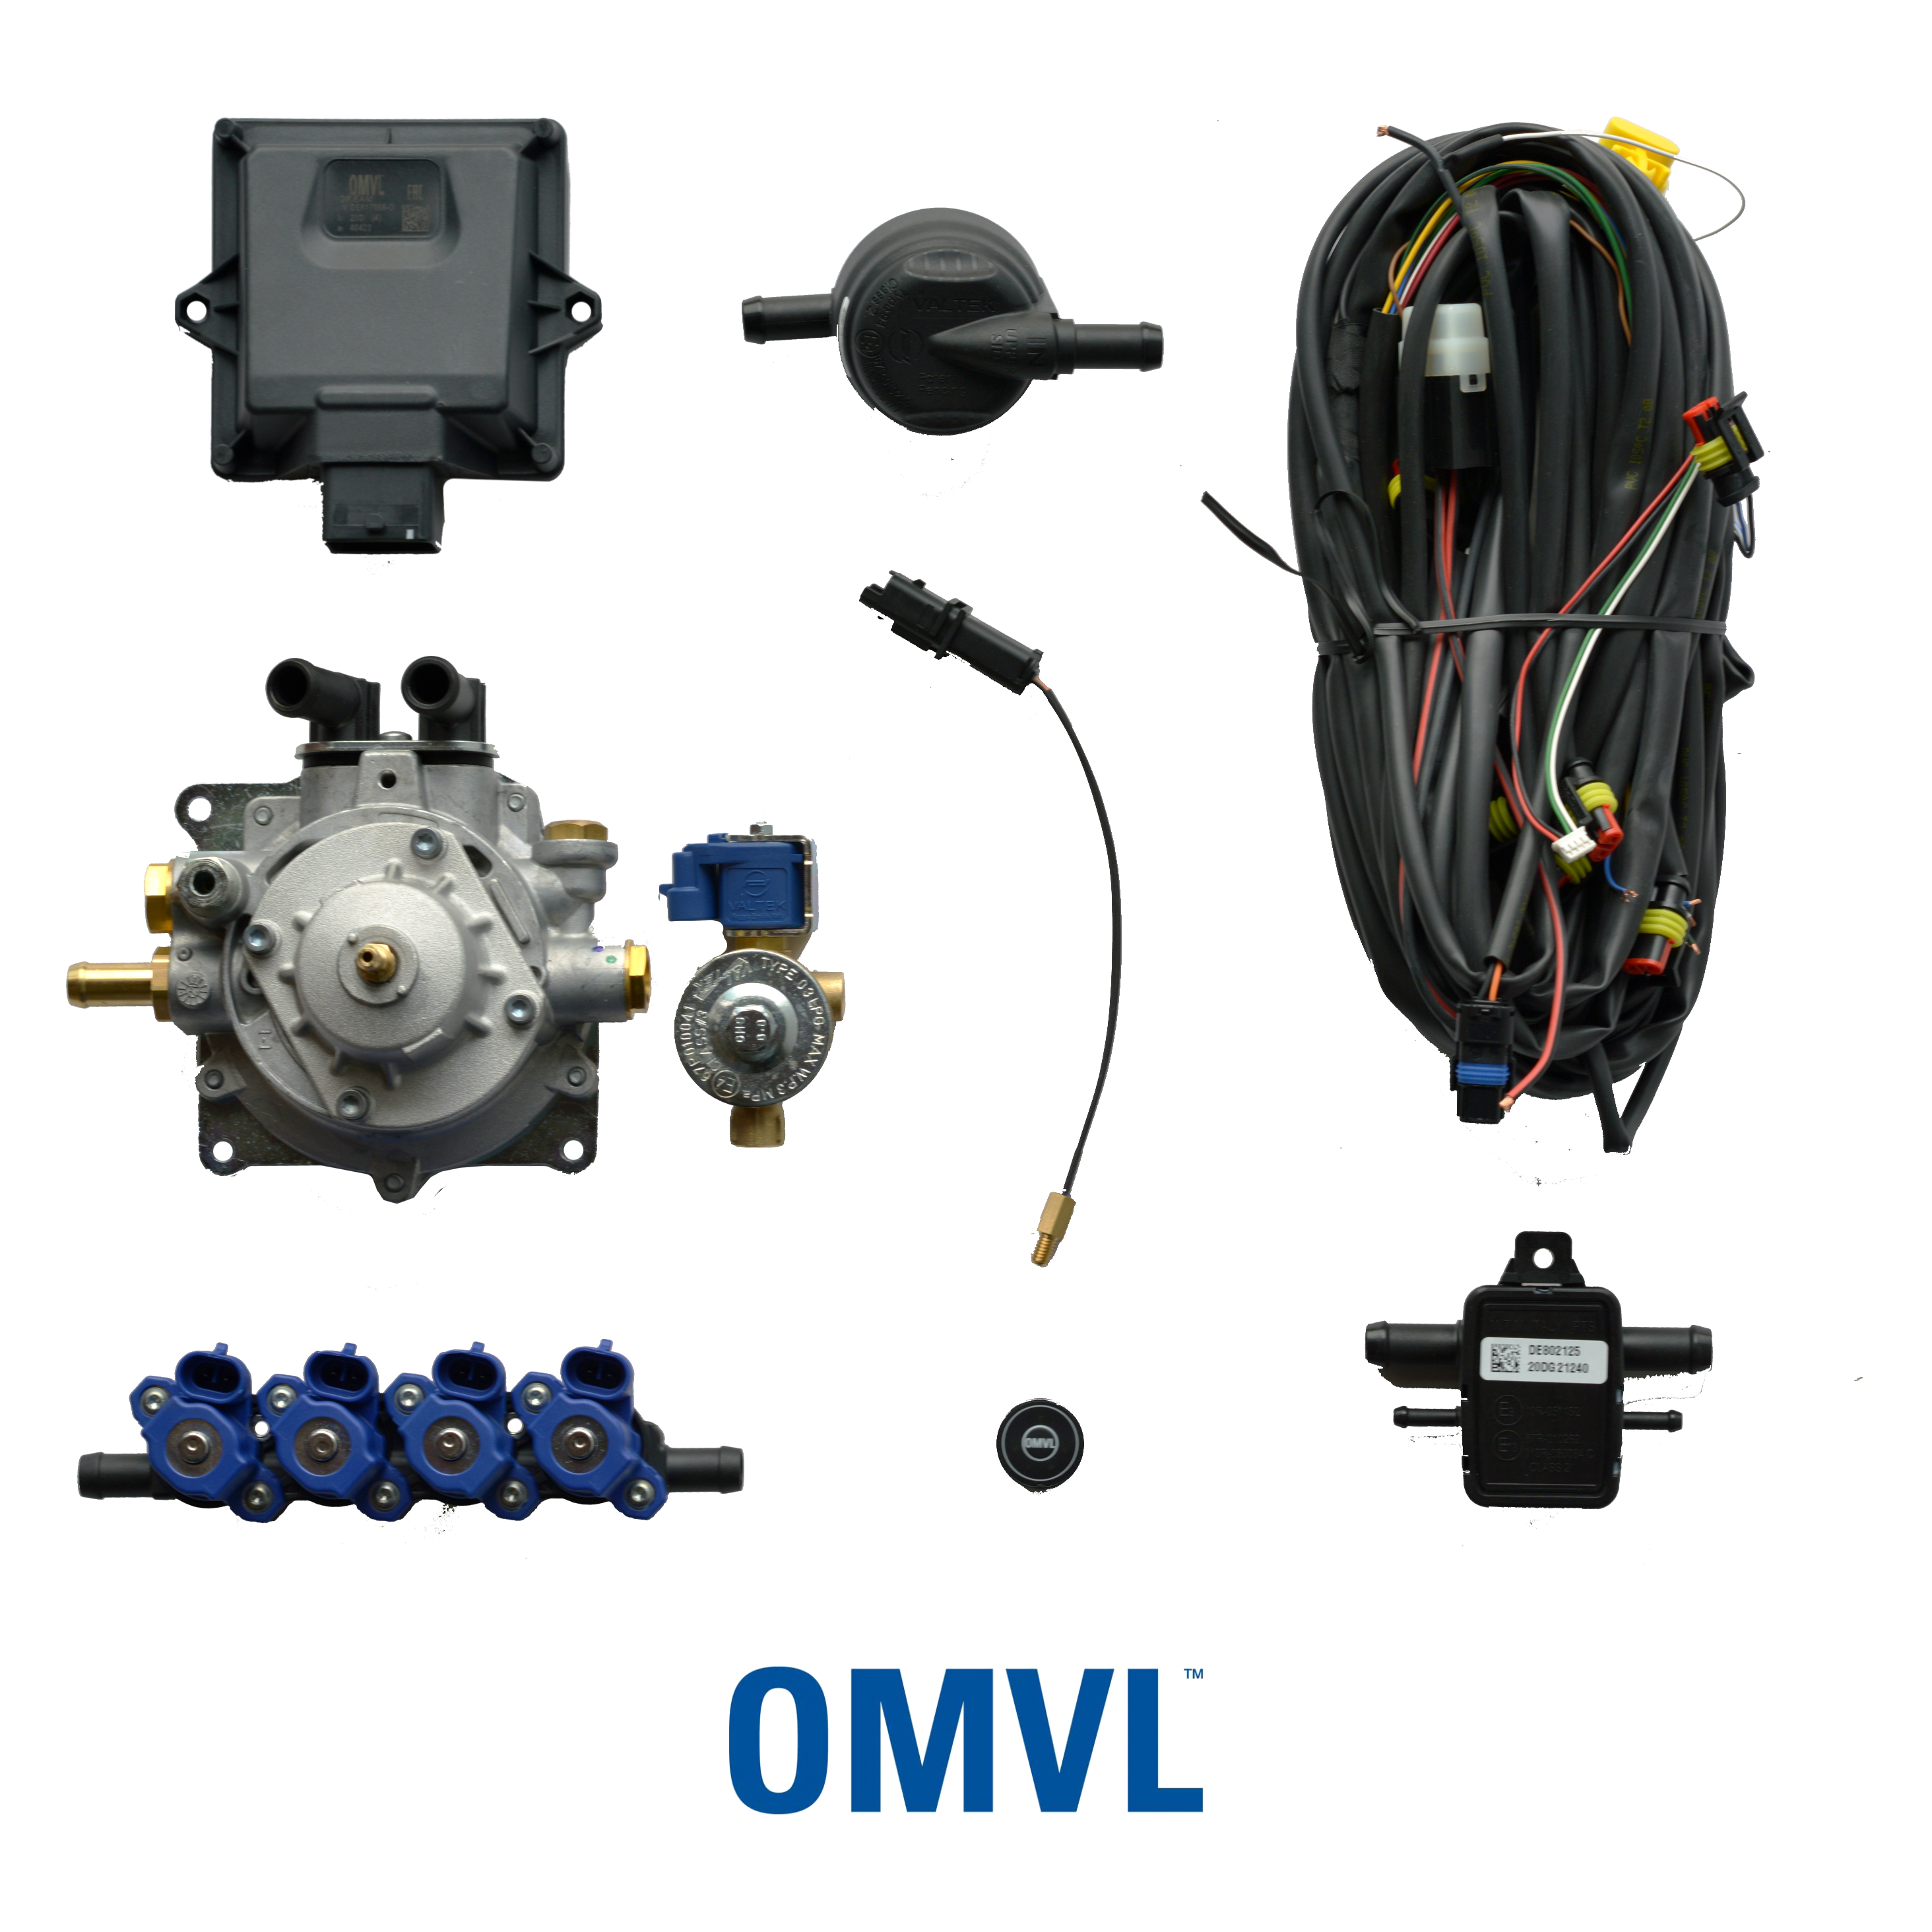 OMVL Saver-4 (CPR 110 КВТ С SL). OMVL Dream XXI газовое оборудование 4 поколения. Комплект ГБО OMVL Dream XXI. OMVL газовое оборудование ei-04e ремкомплект. Omvl new dream